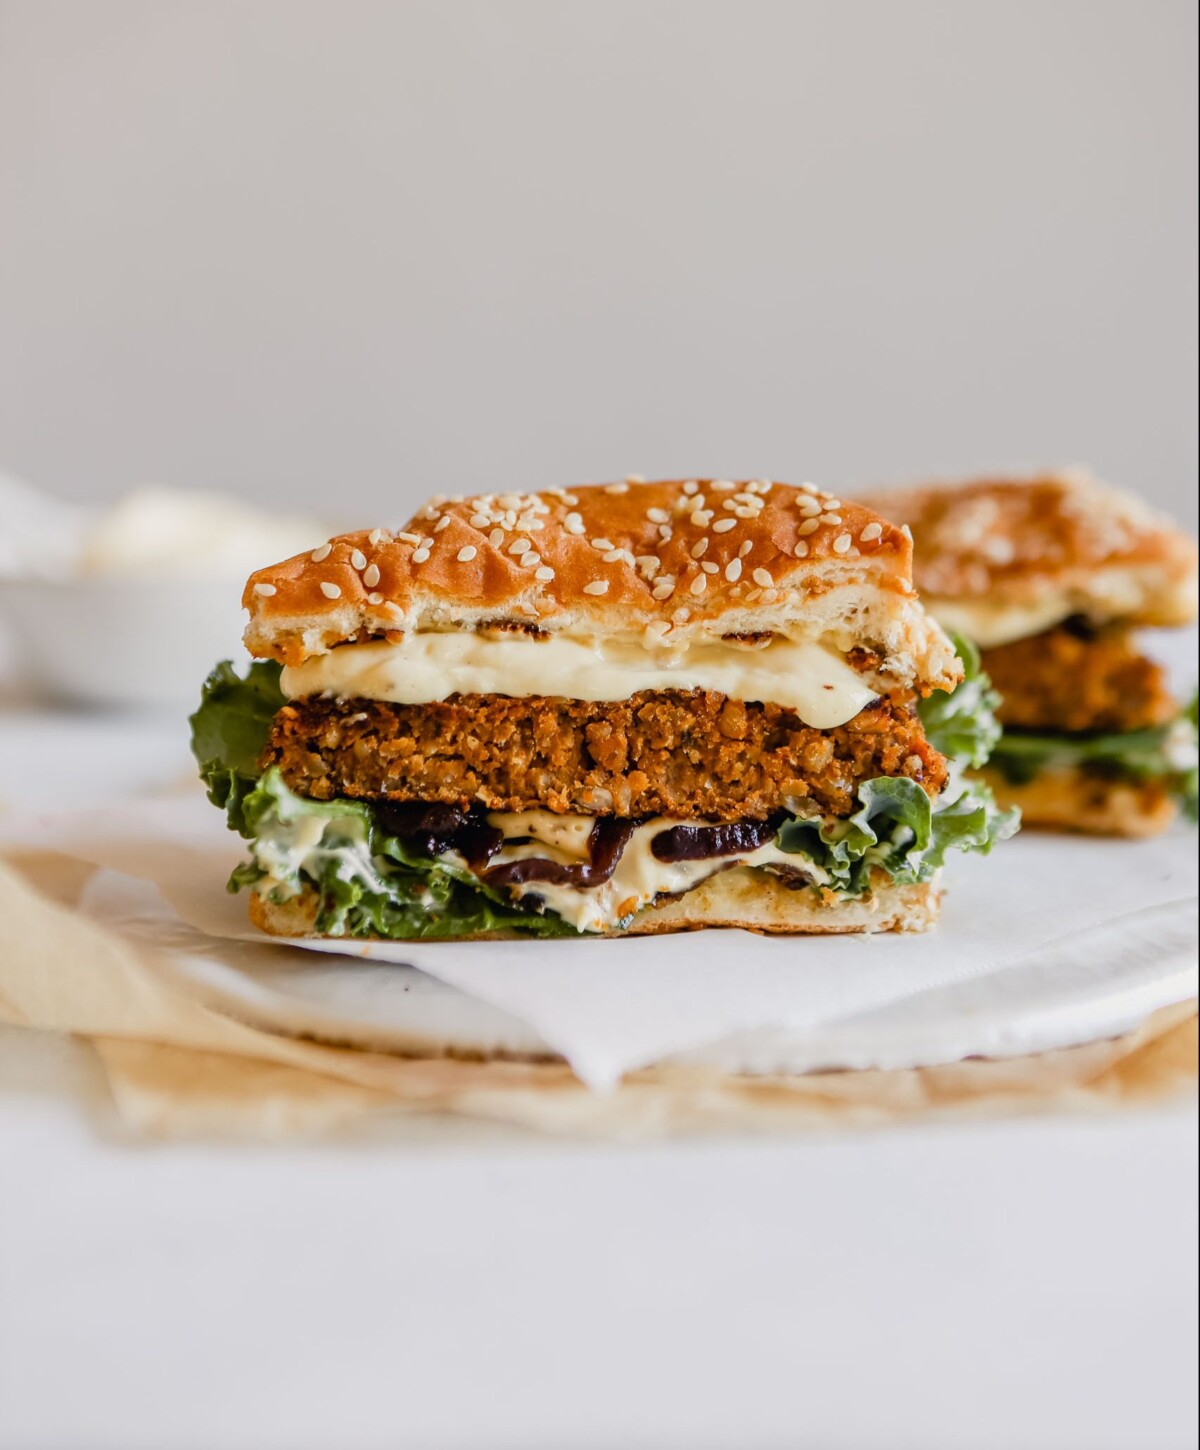 Photograph of a vegan mushroom veggie burger set on a white plate